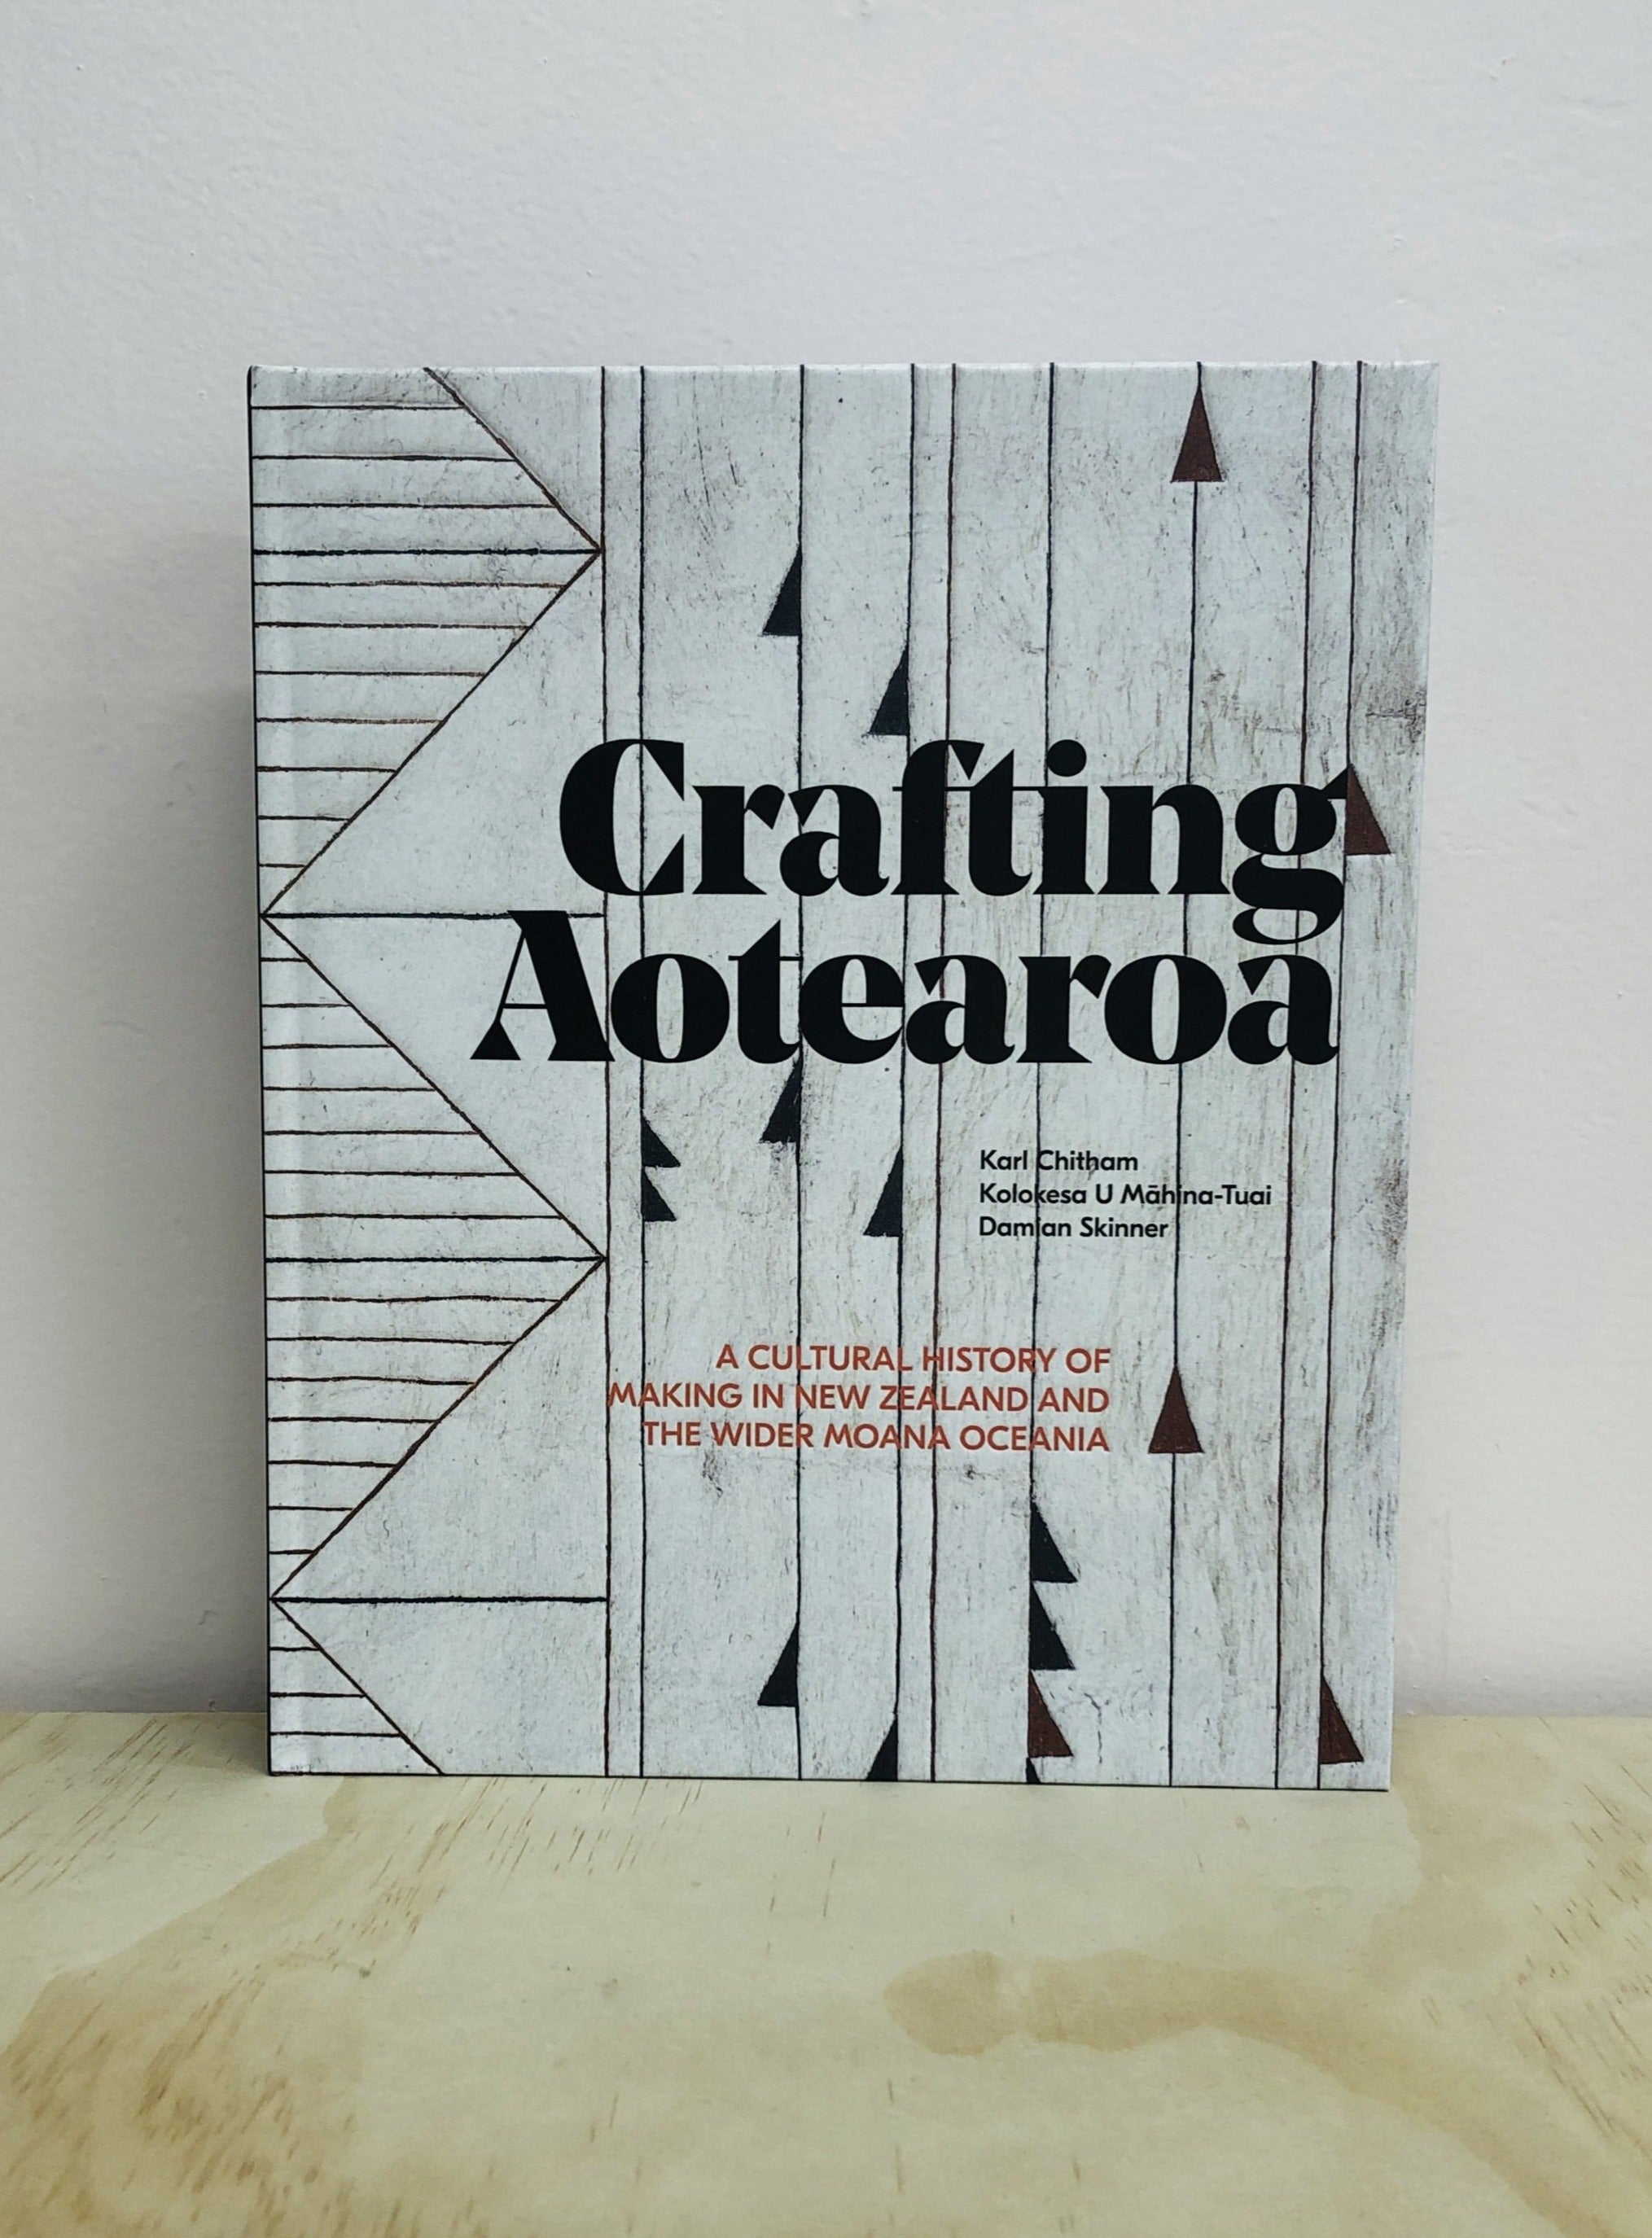 Crafting Aotearoa: A Cultural History of Making in New Zealand and the Wider Moana Oceania - Edited by Karl Chitham, Kolokesa Uafa Mahina-Tuai, Damian Skinner